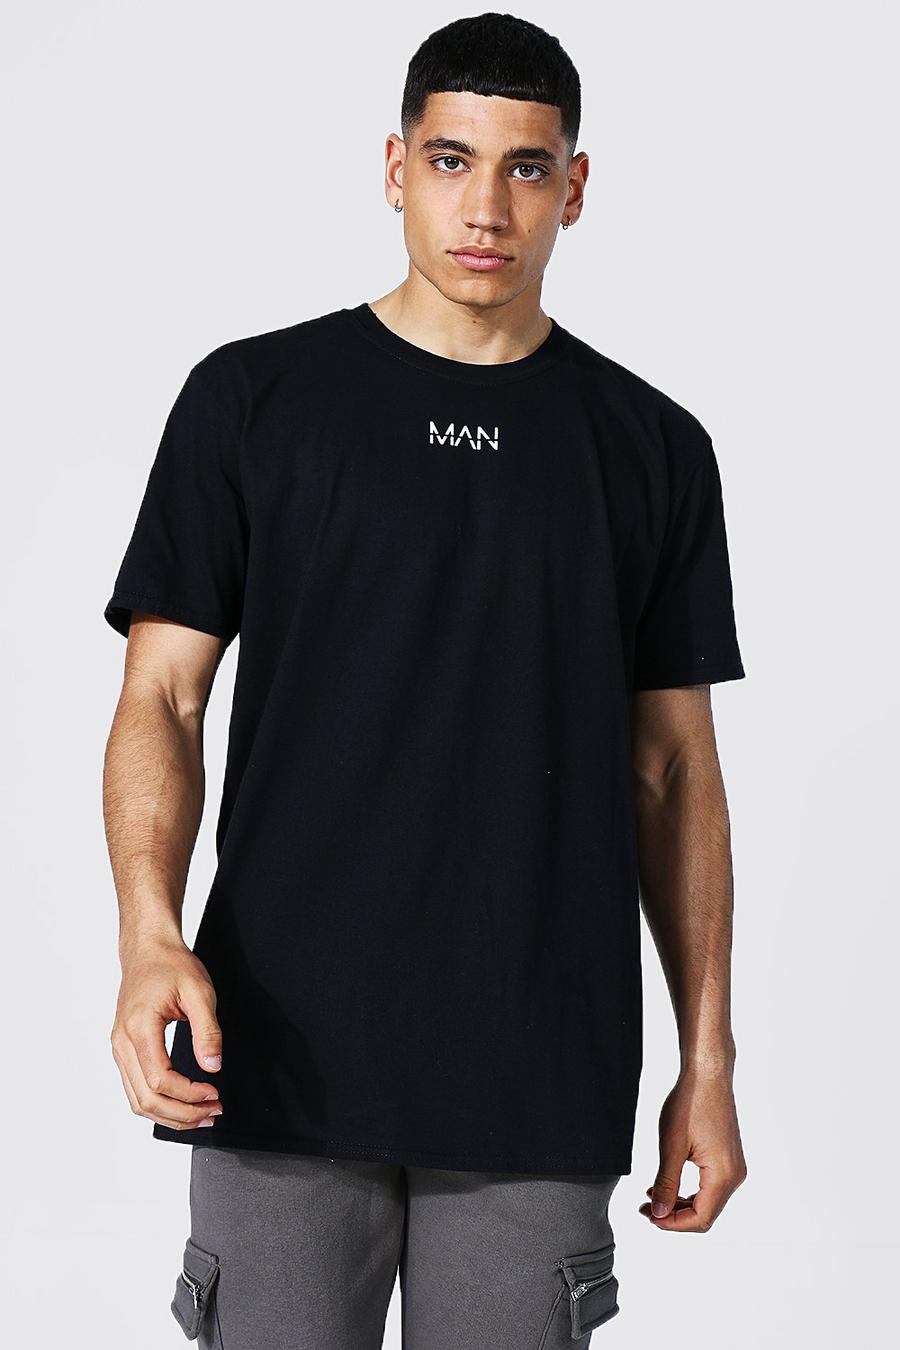 Black Oversized Original Man T-shirt image number 1